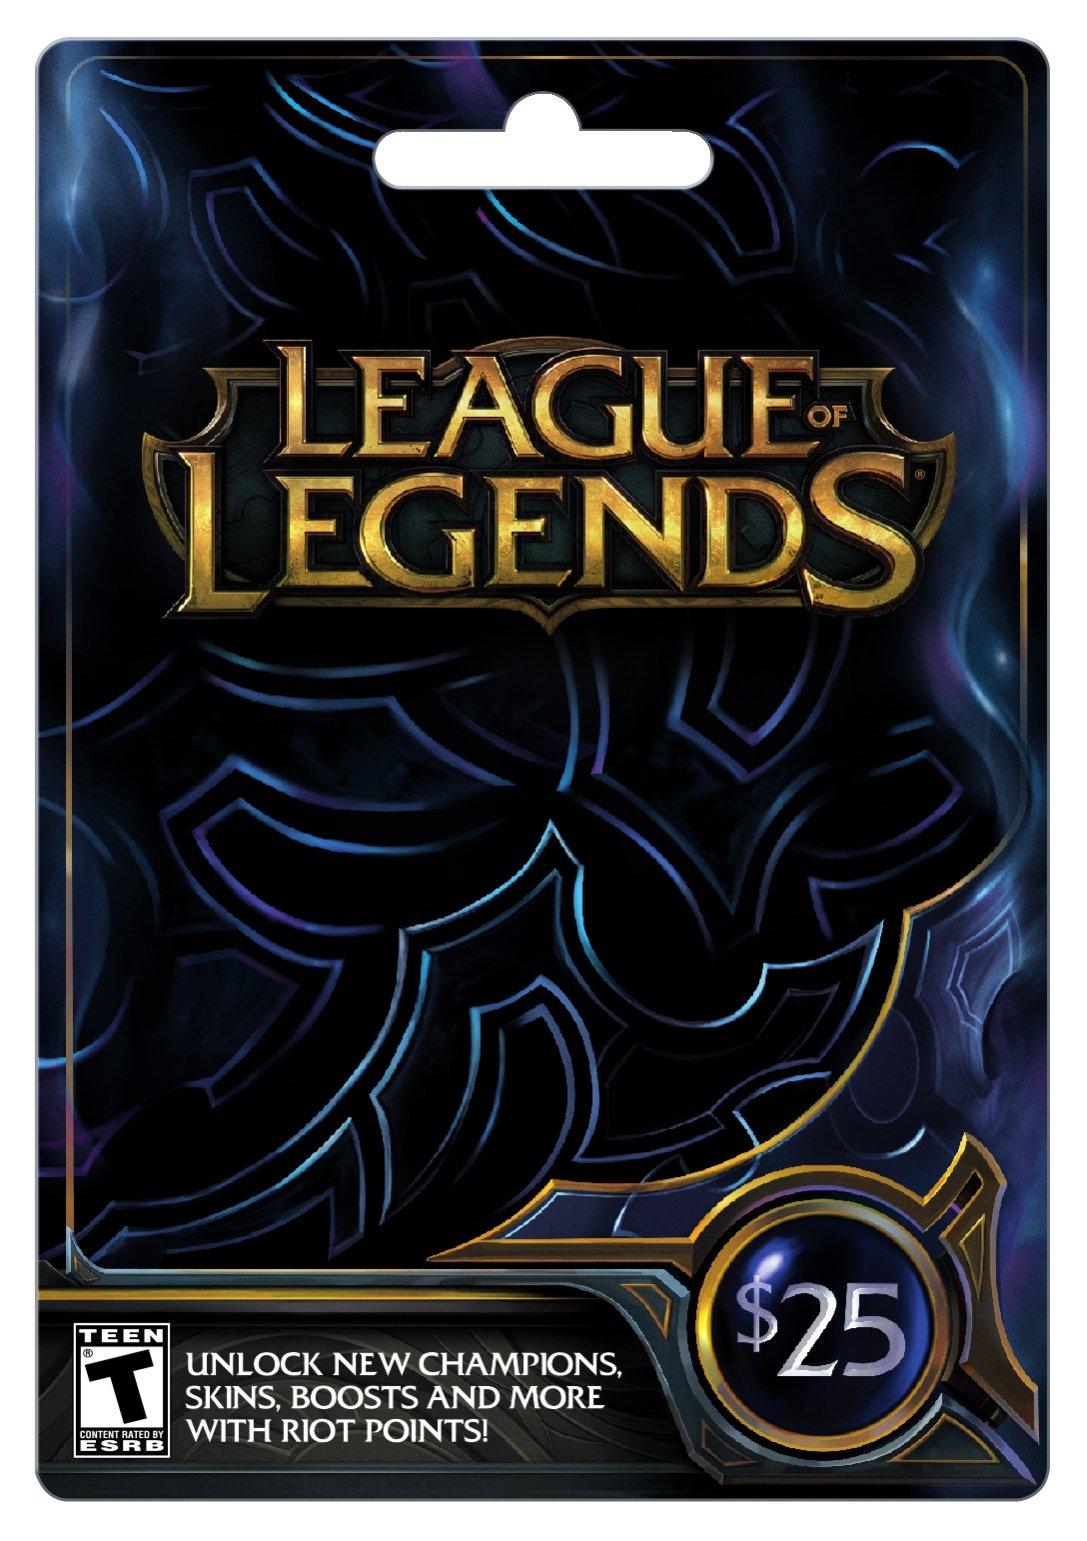 League Of Legends 25 Game Card Gamestop - $25 roblox gift card gamestop lol